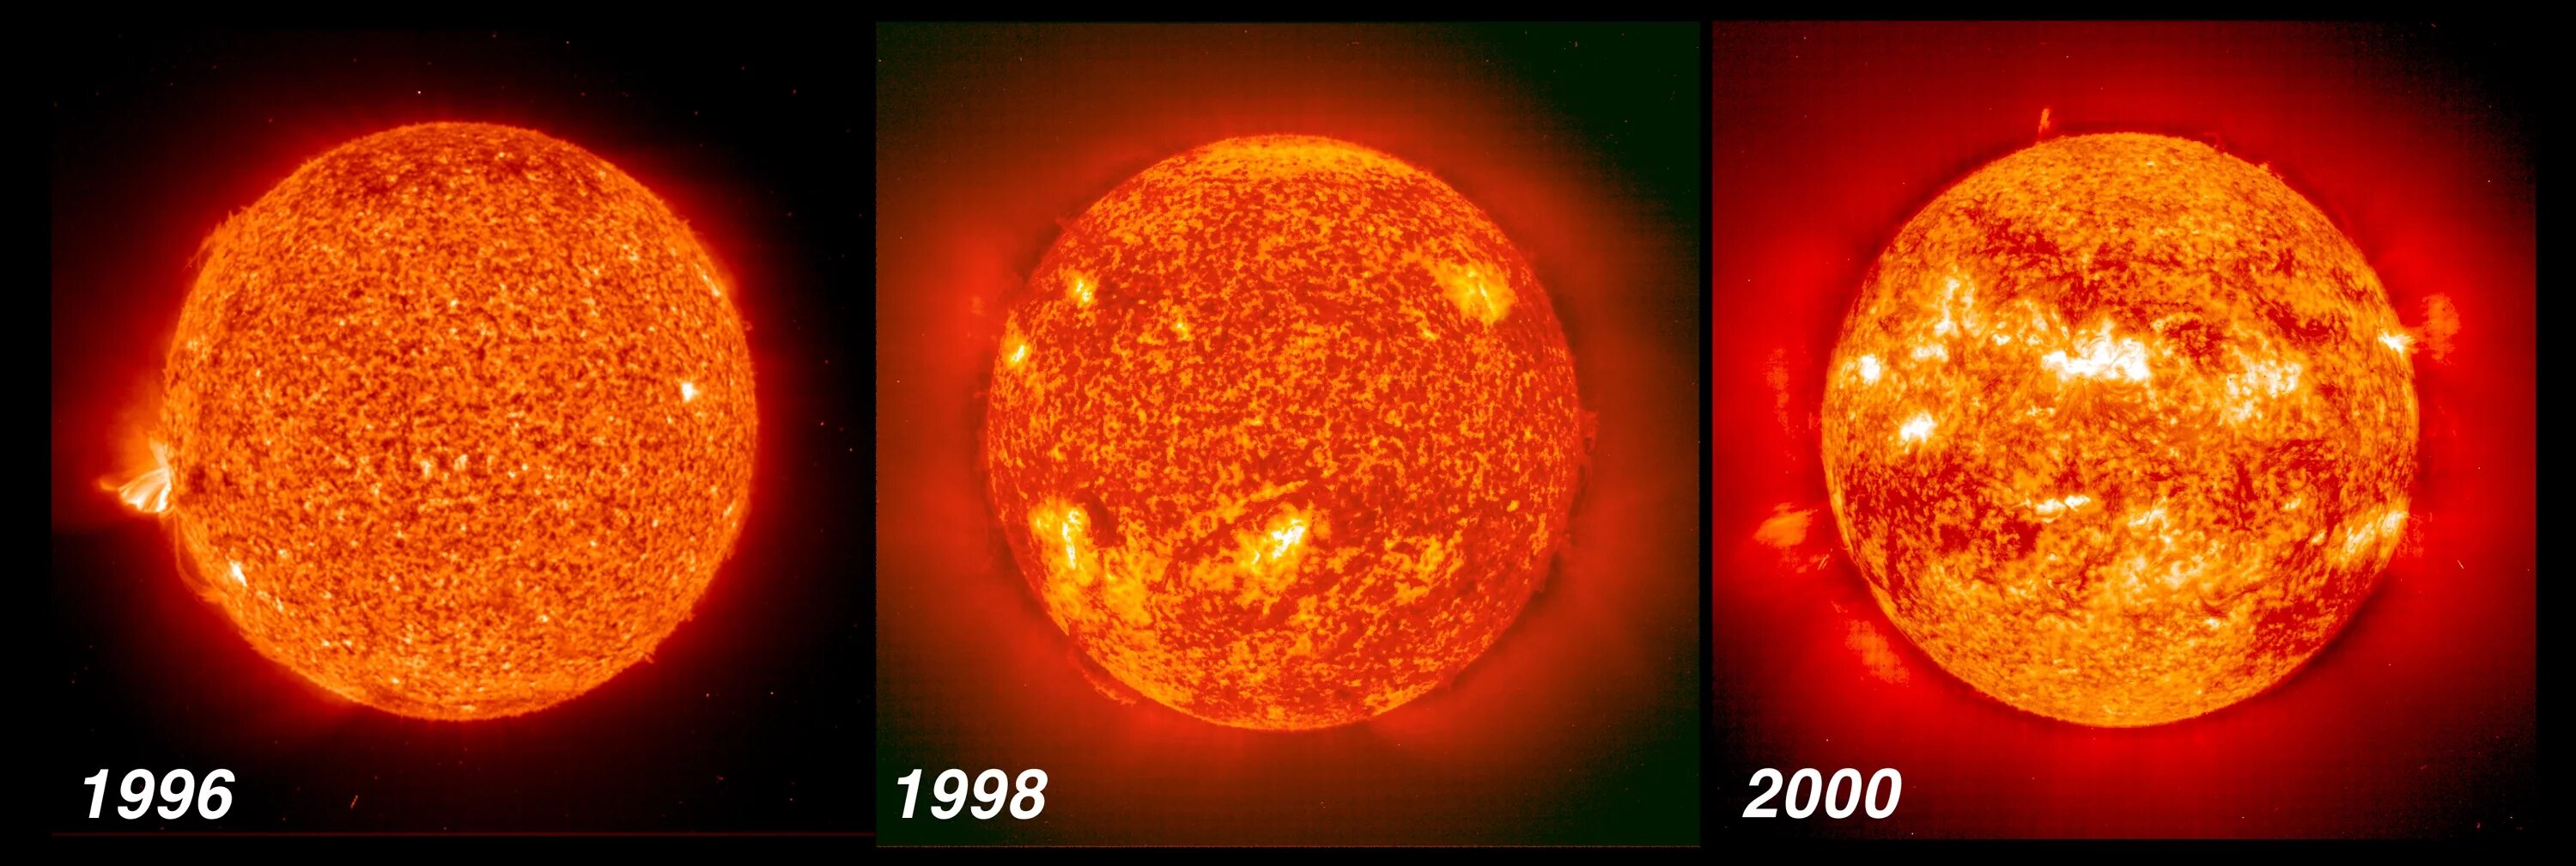 Смена солнца. Солнечная активность. Изменение активности солнца. Солнечная активность солнца. Изменение светимости солнца.